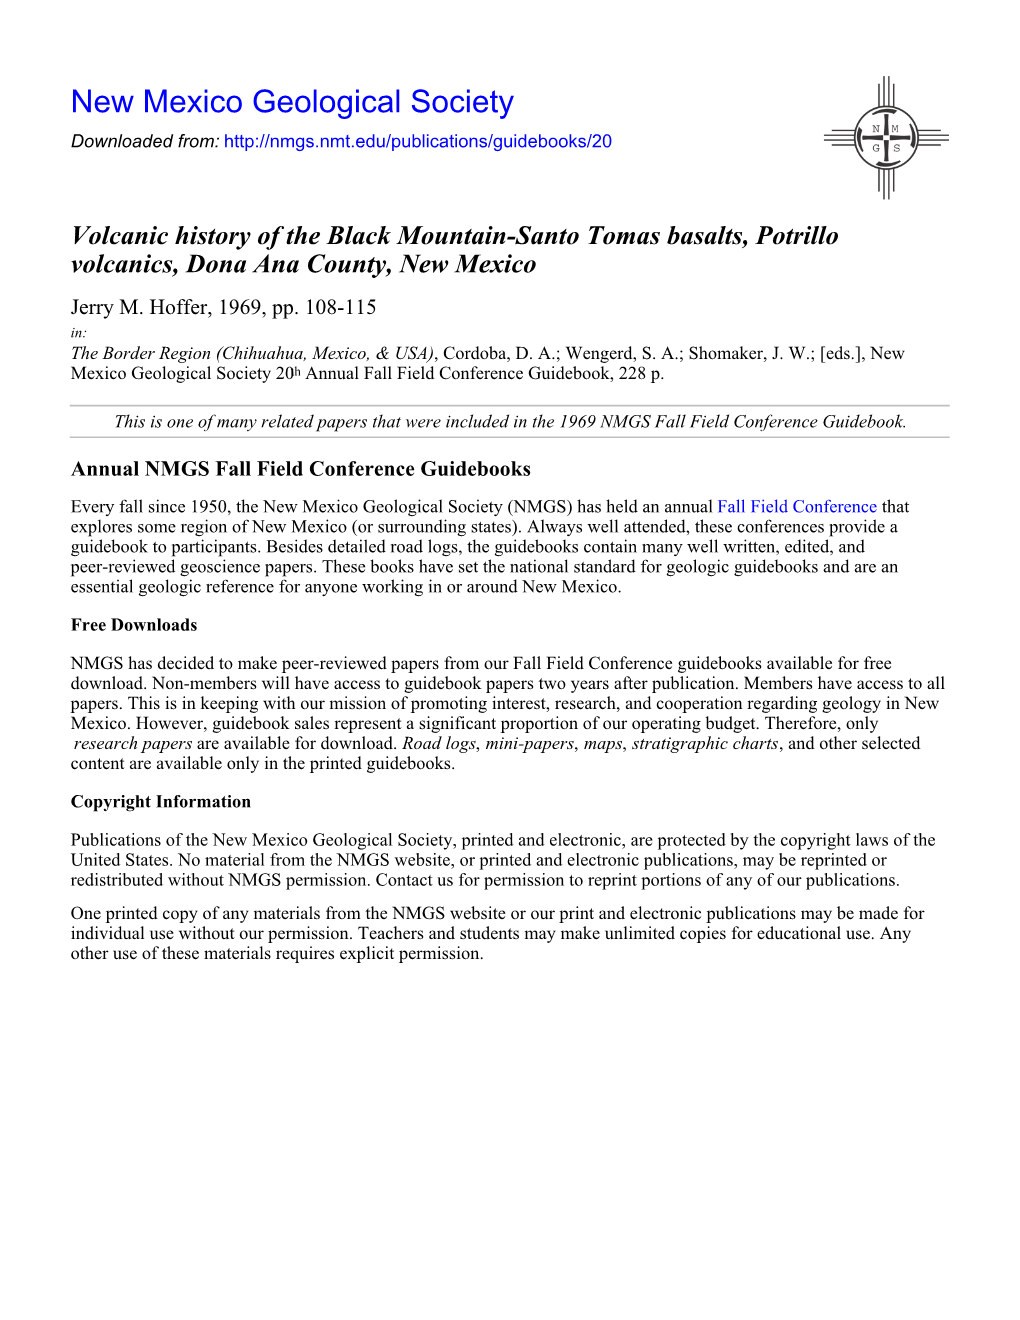 Volcanic History of the Black Mountain-Santo Tomas Basalts, Potrillo Volcanics, Dona Ana County, New Mexico Jerry M